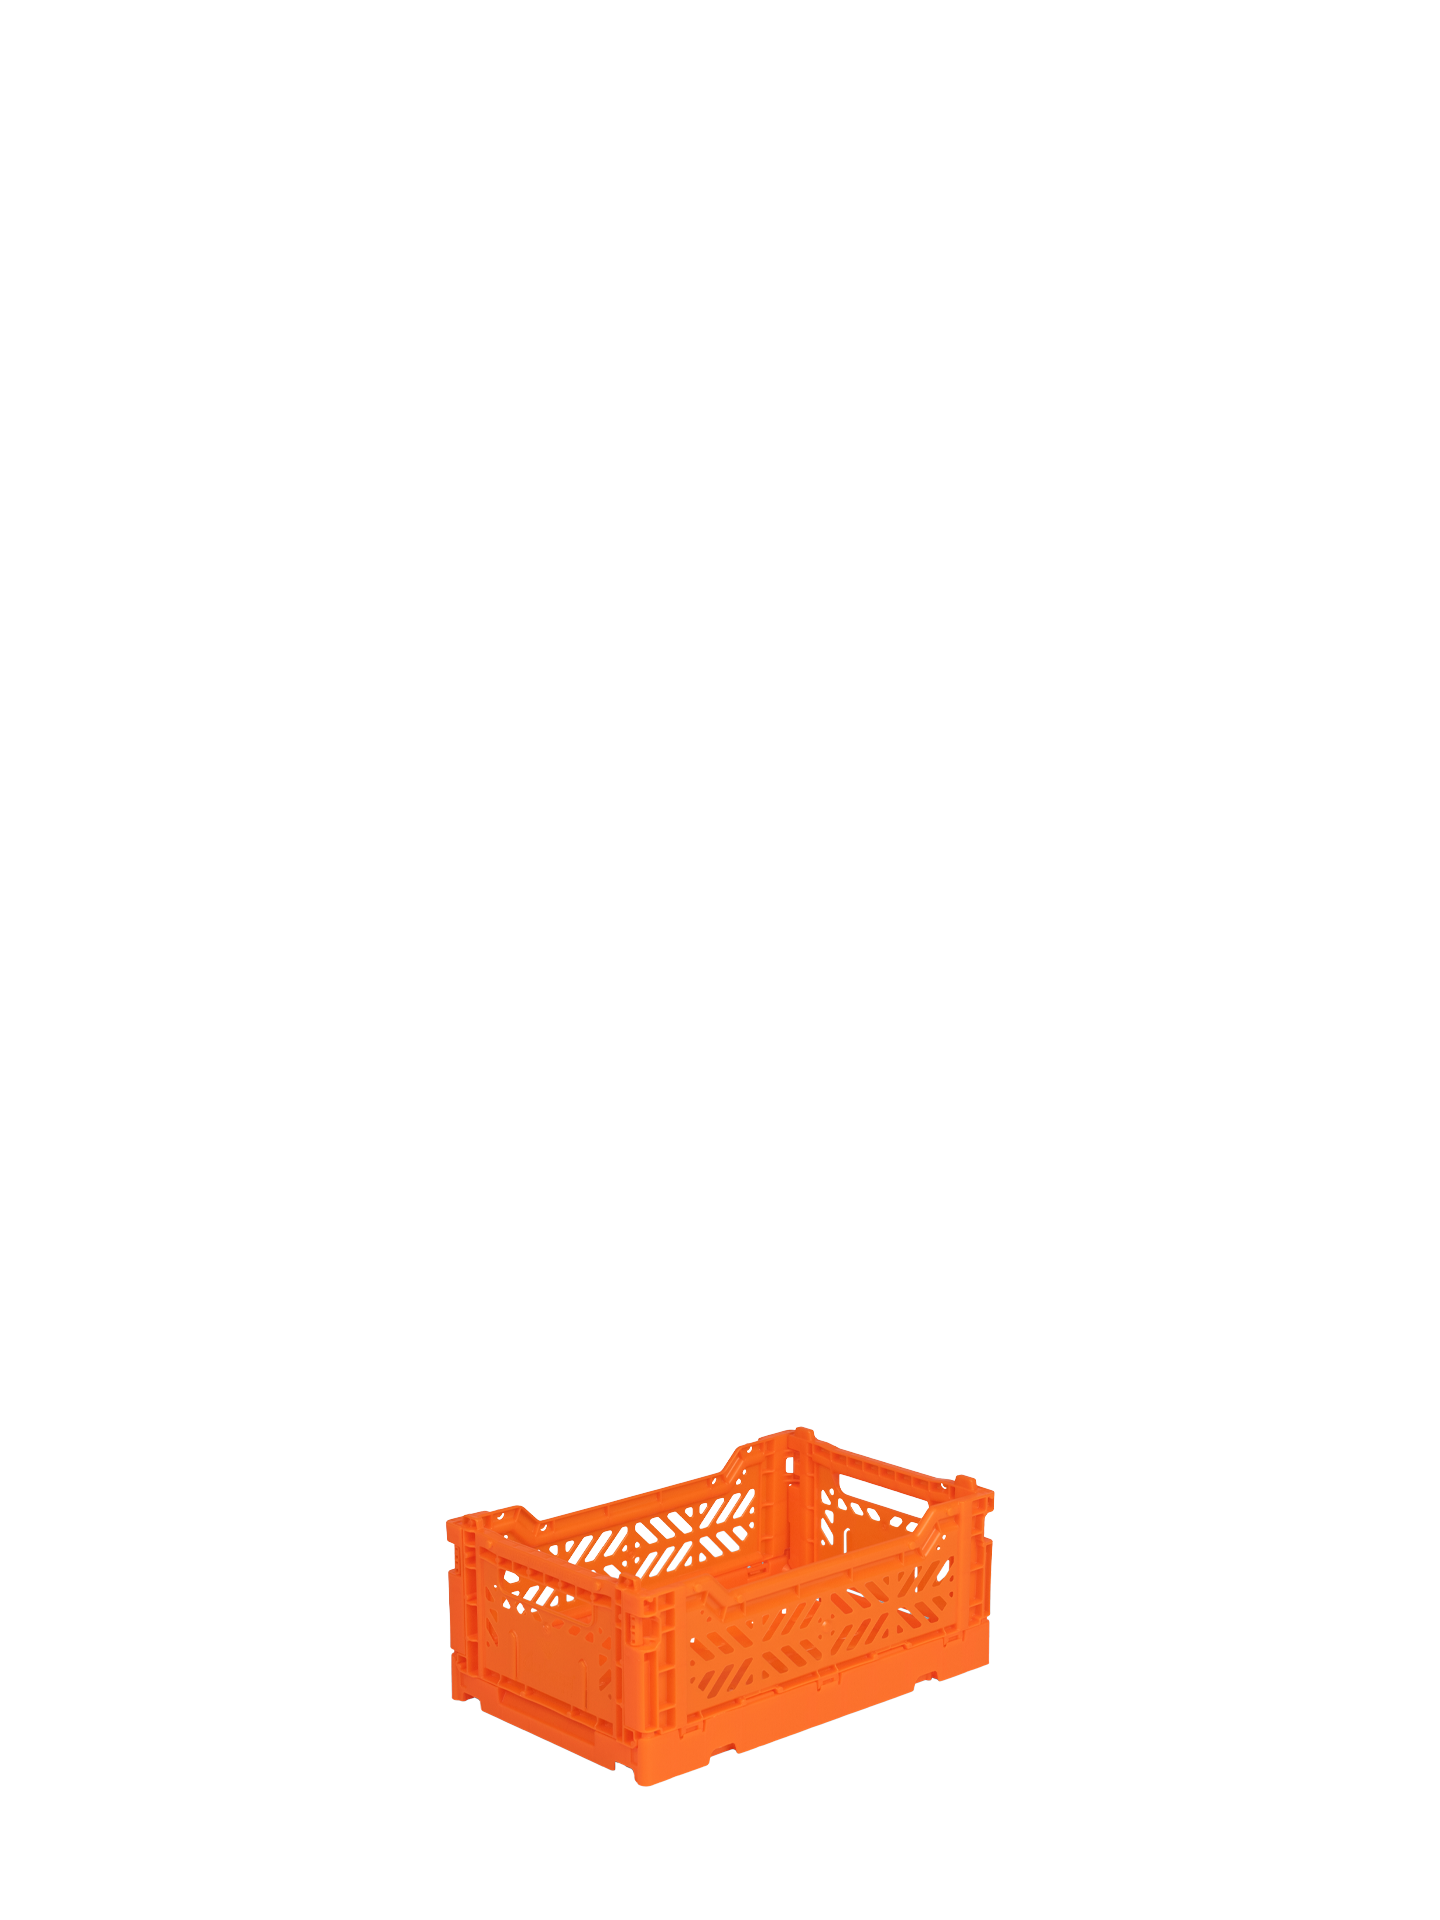 Mini Aykasa crate in orange stacks and folds